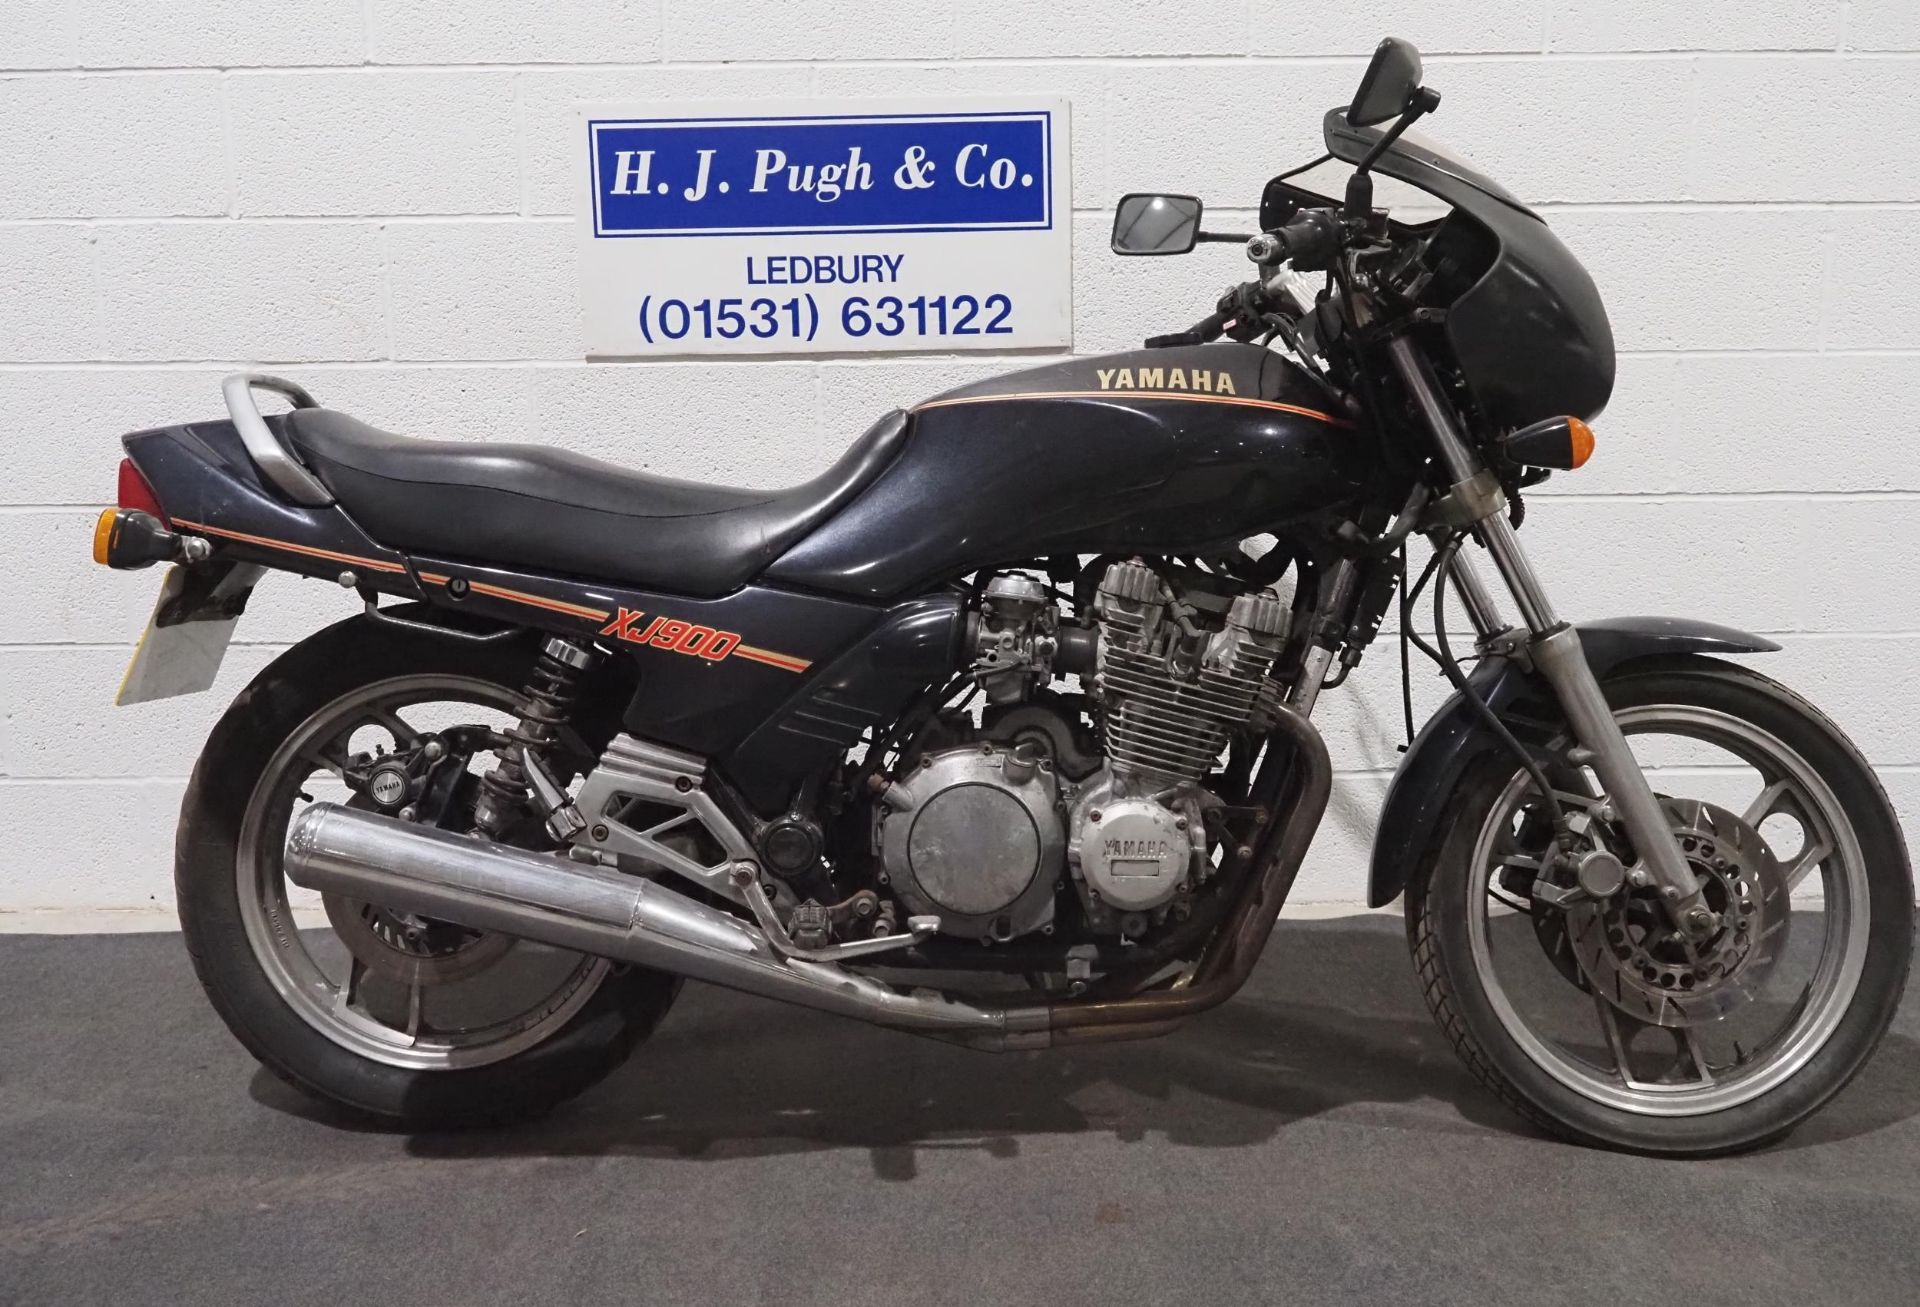 Yamaha XJ900 motorcycle. 1990. 891cc. Frame No. 58L039142. Engine No. 58L039142. Needs - Image 7 of 7